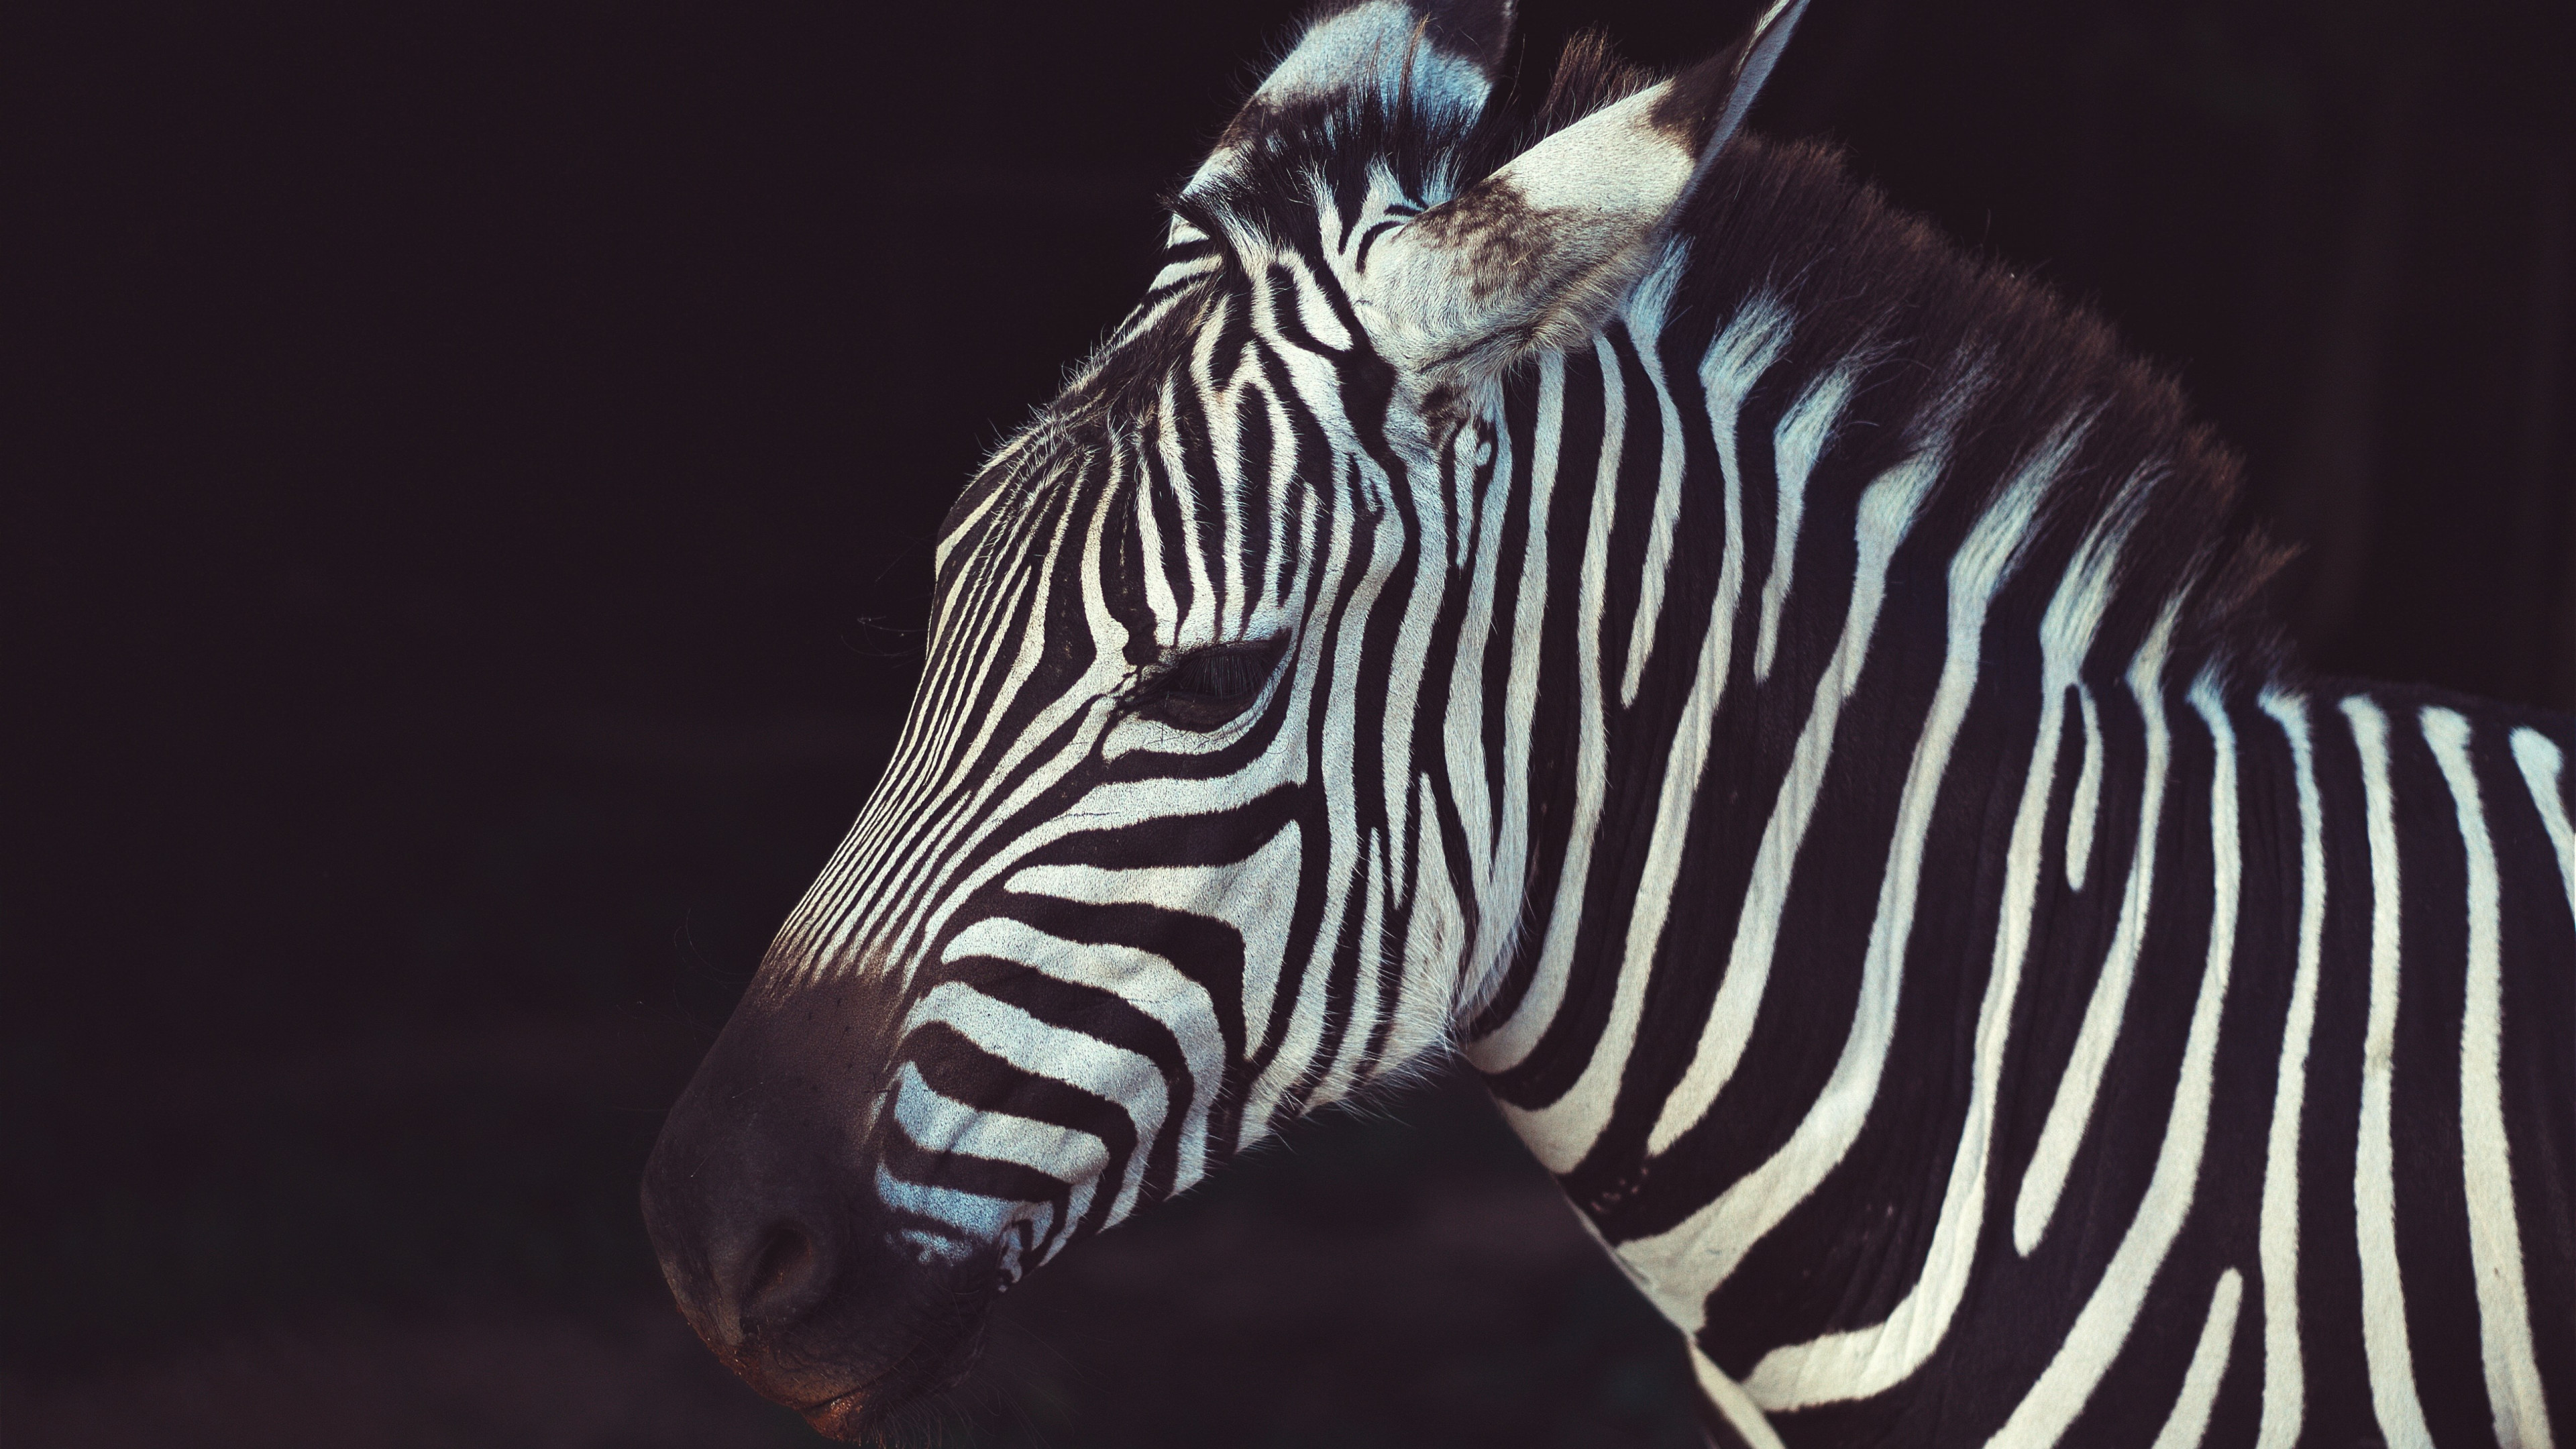 Zebra portrait from Greeneville Zoo, USA wallpaper 3840x2160